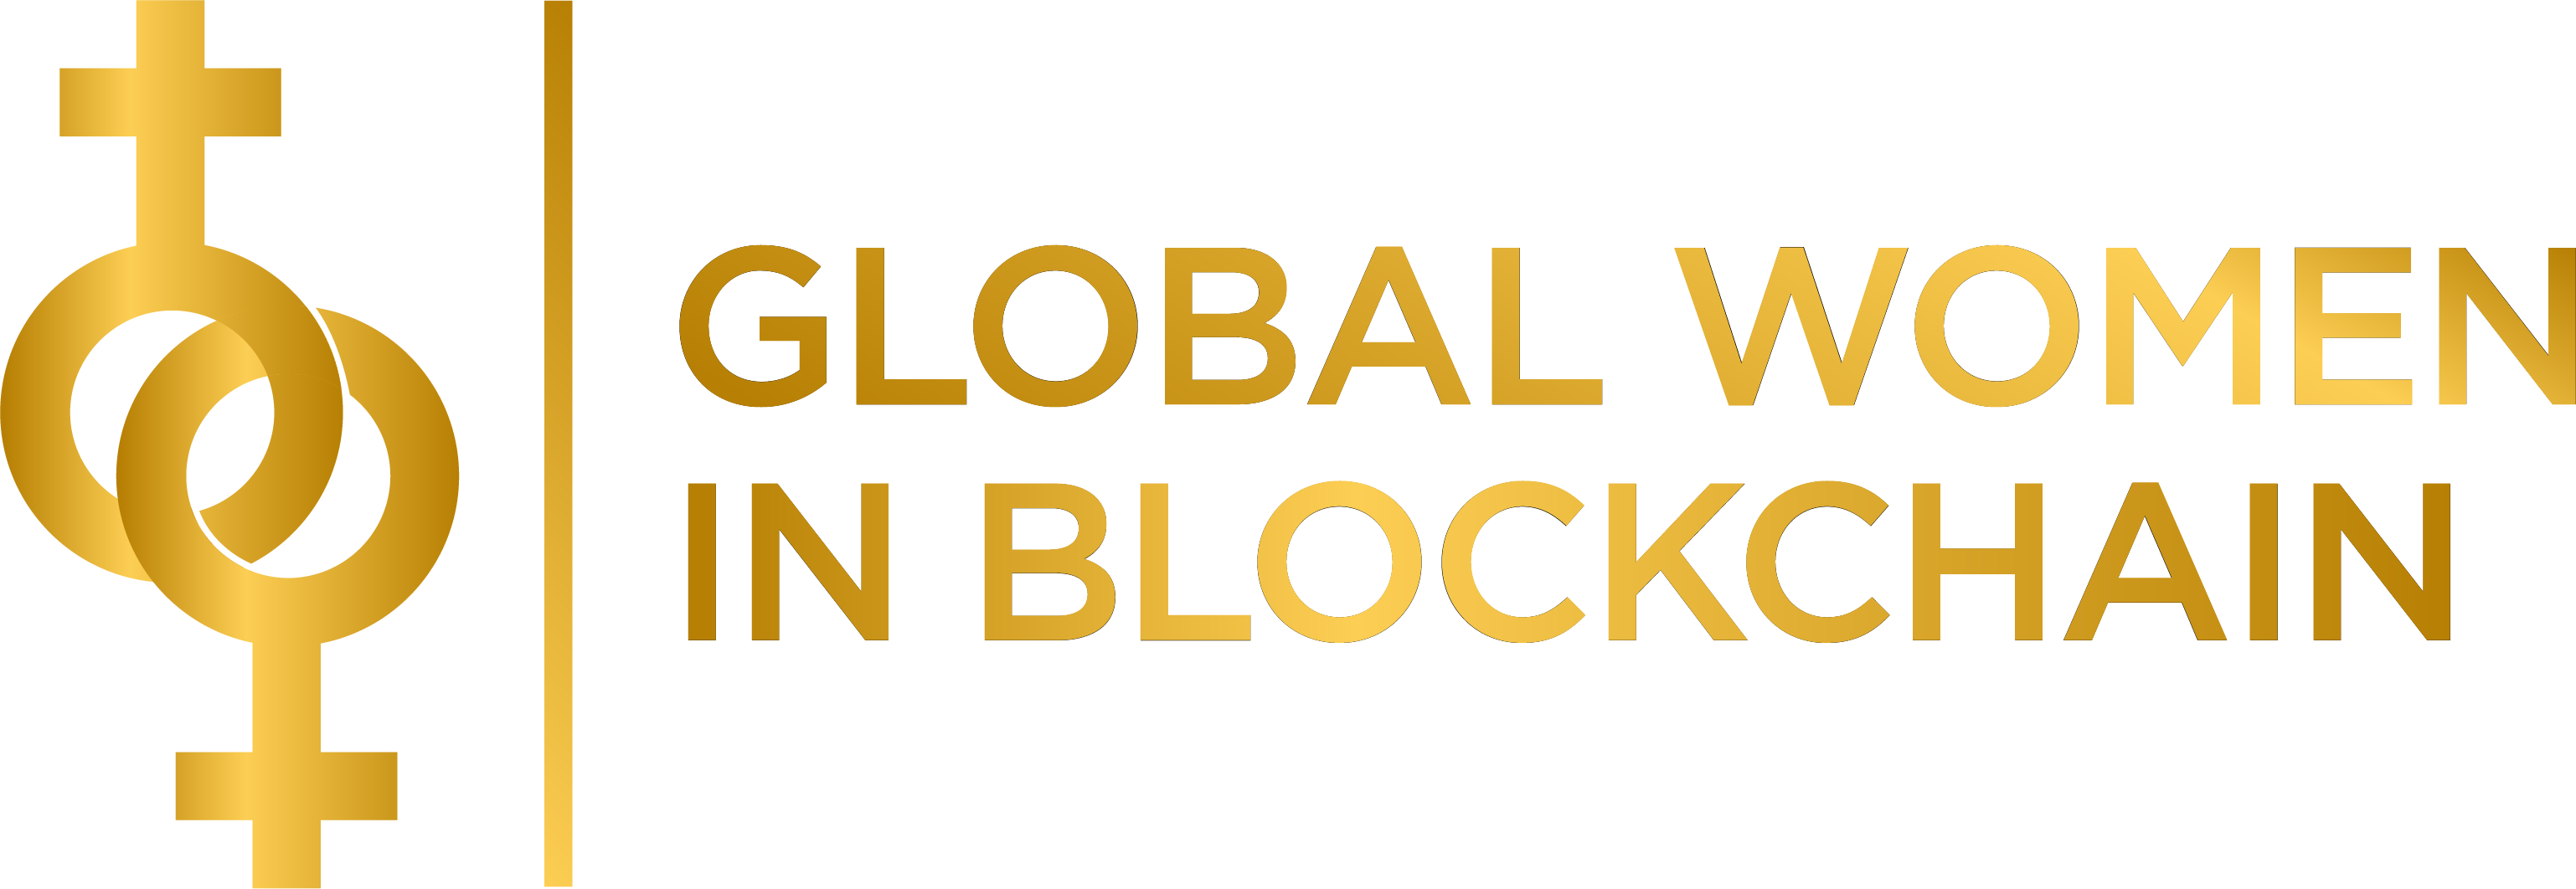 Global Women In Blockchain